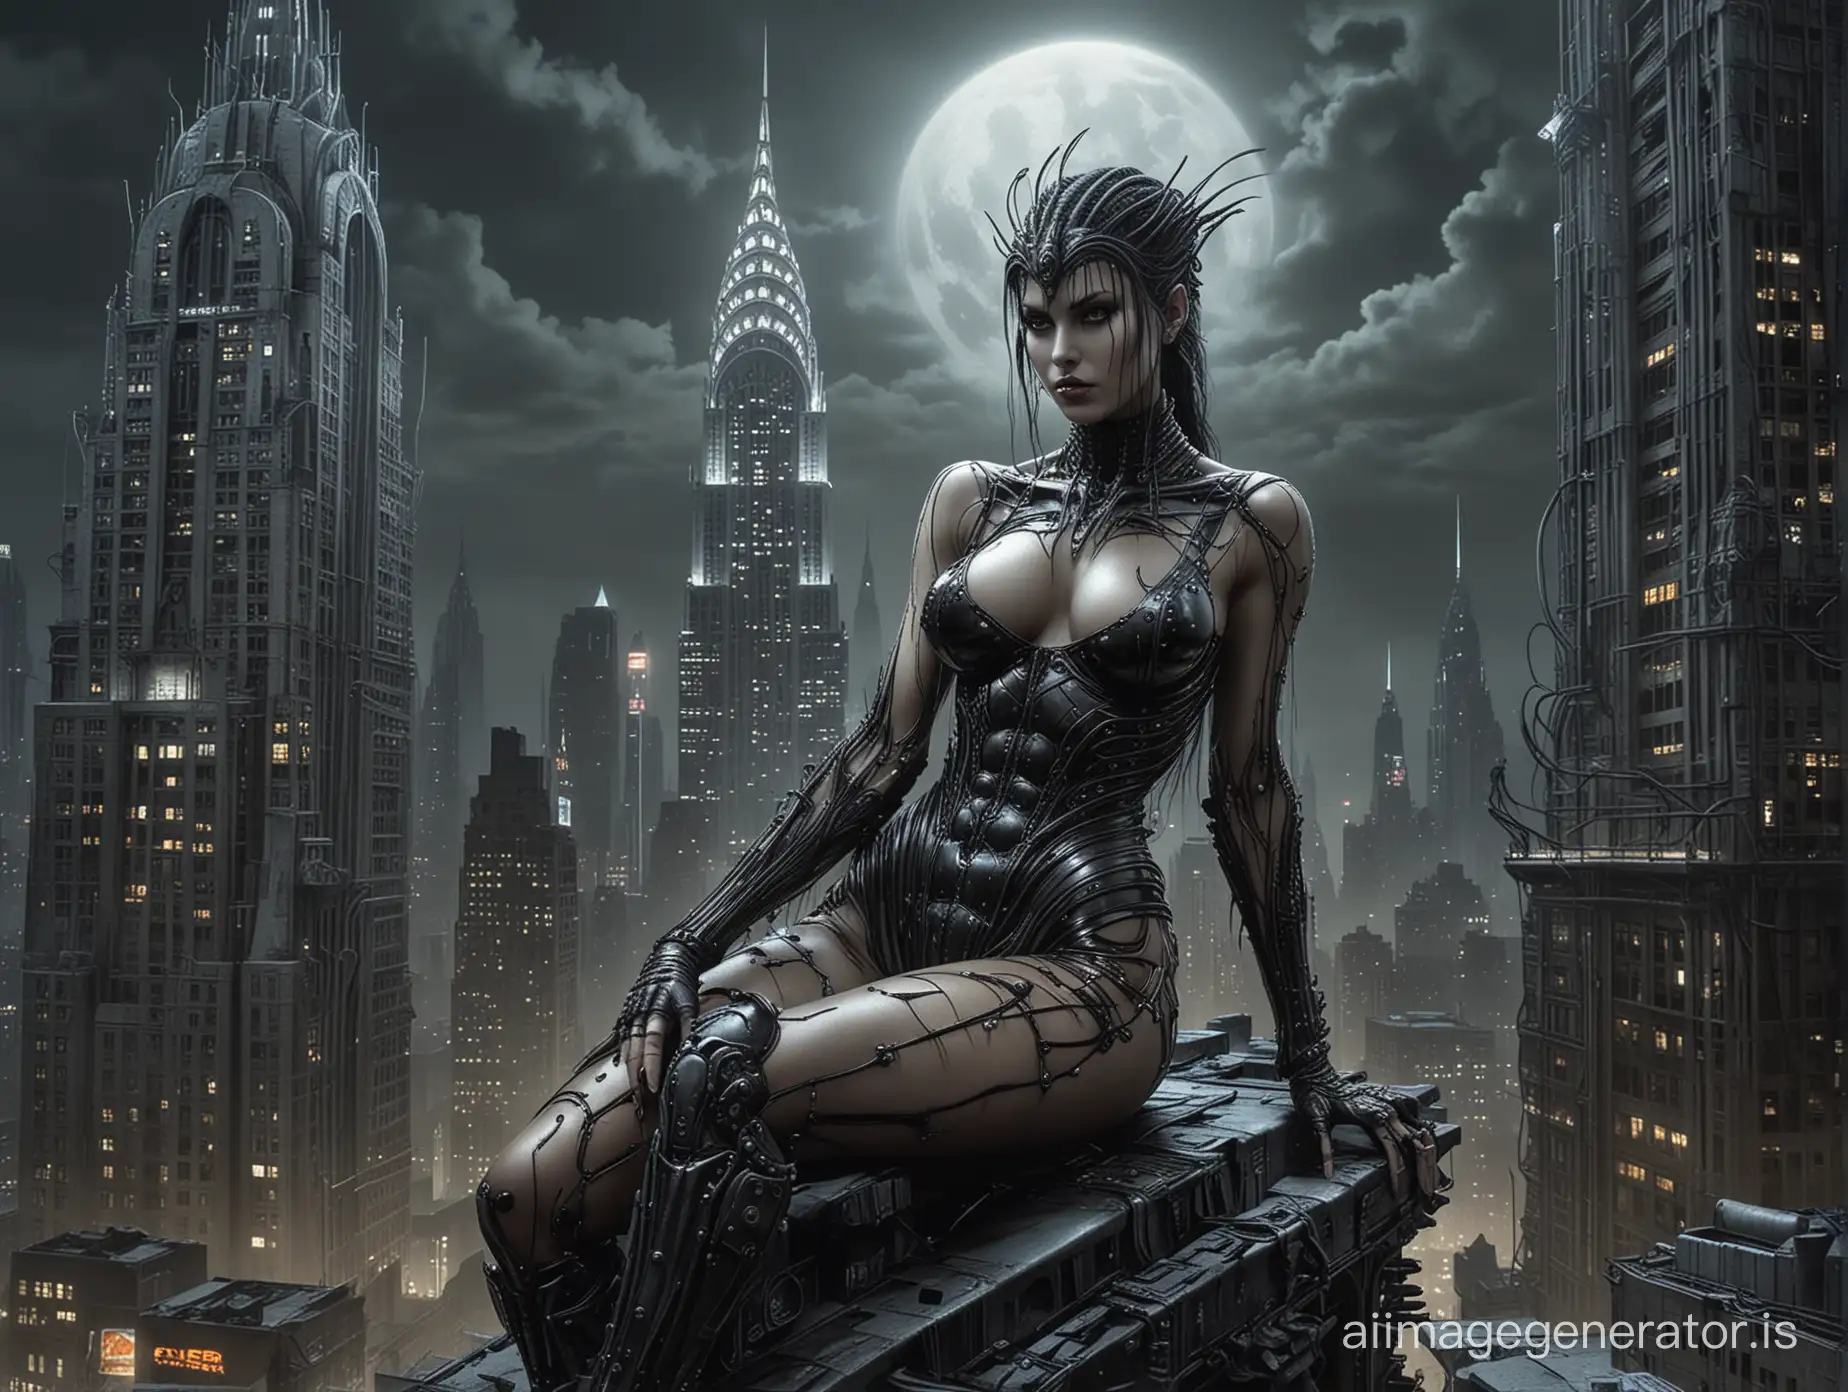 Futuristic-Femme-Fatale-Cyberpunk-Woman-at-Chrysler-Building